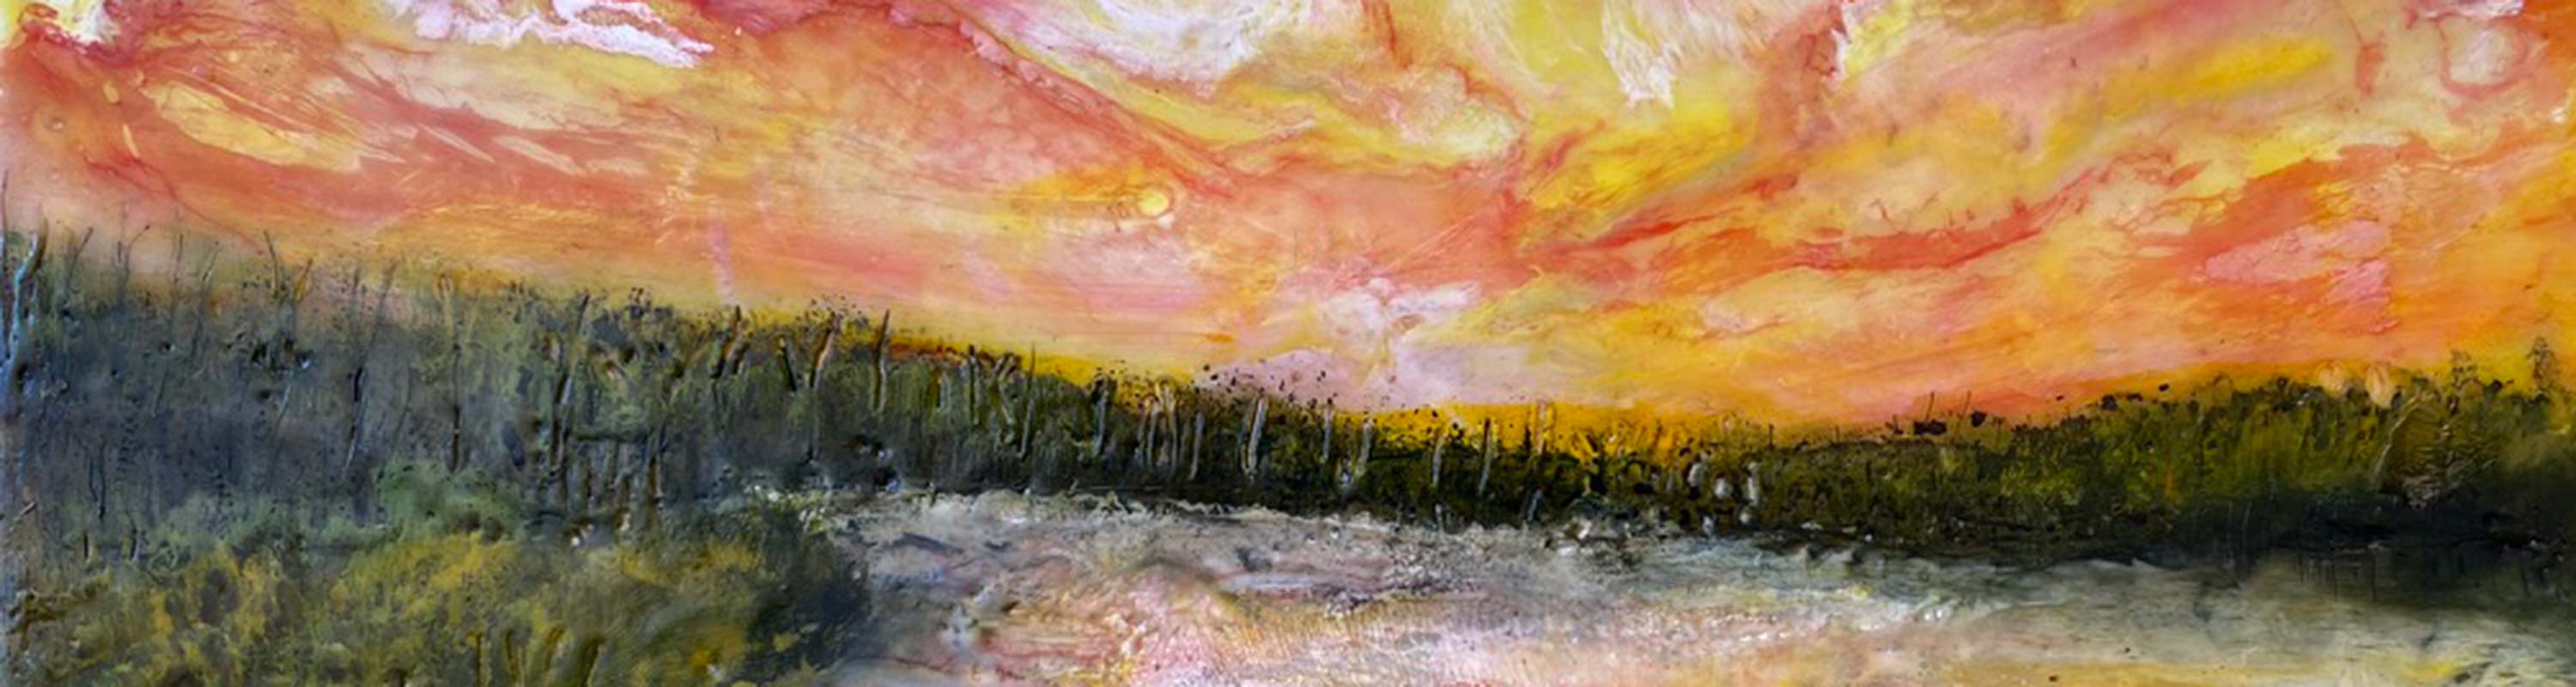 encaustic painting of Salmon River estuary at sunset